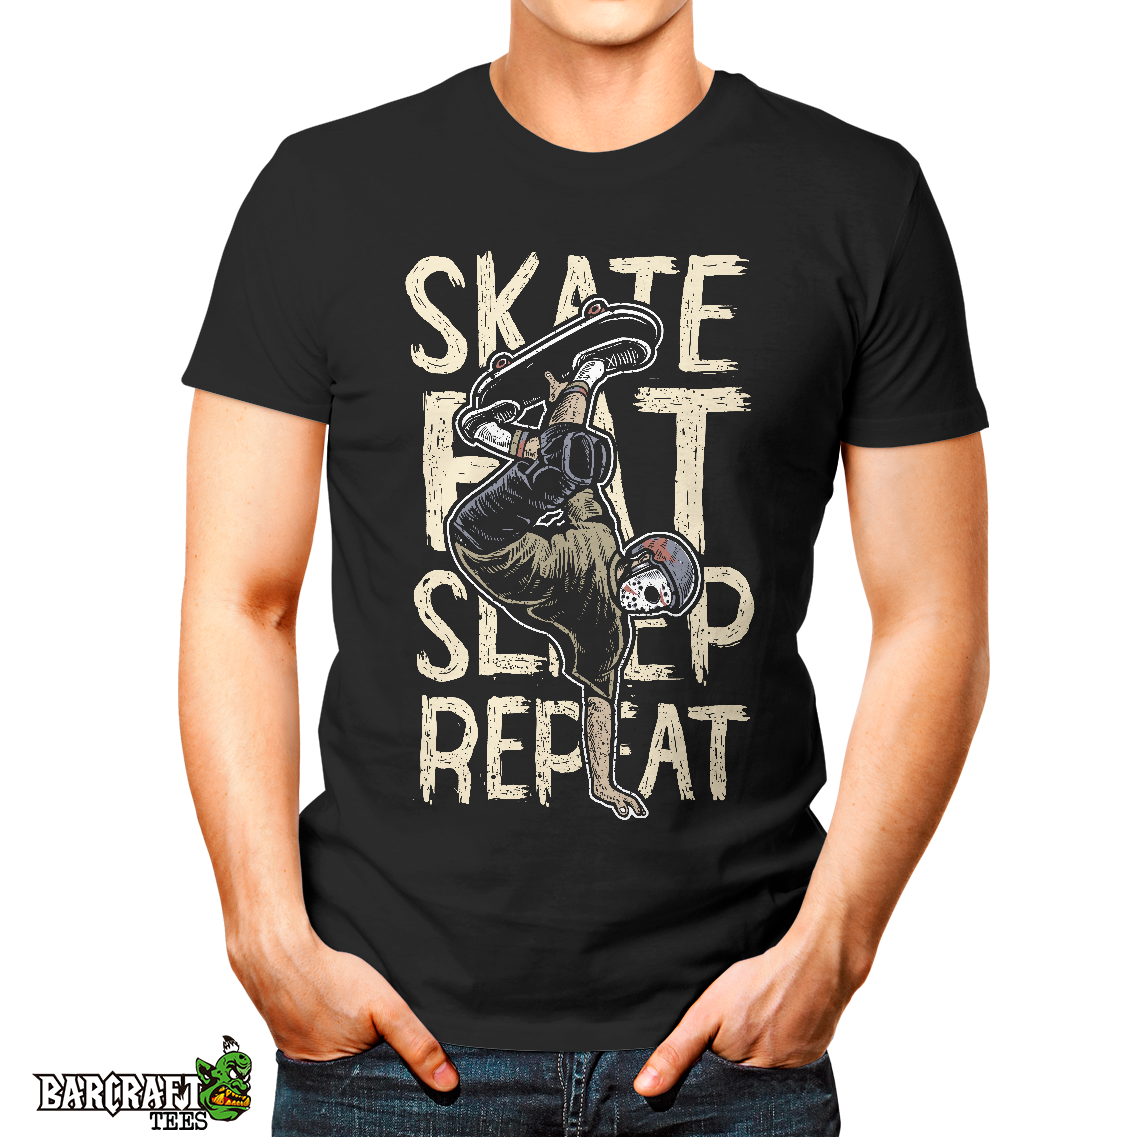 Skate eat sleep repeat